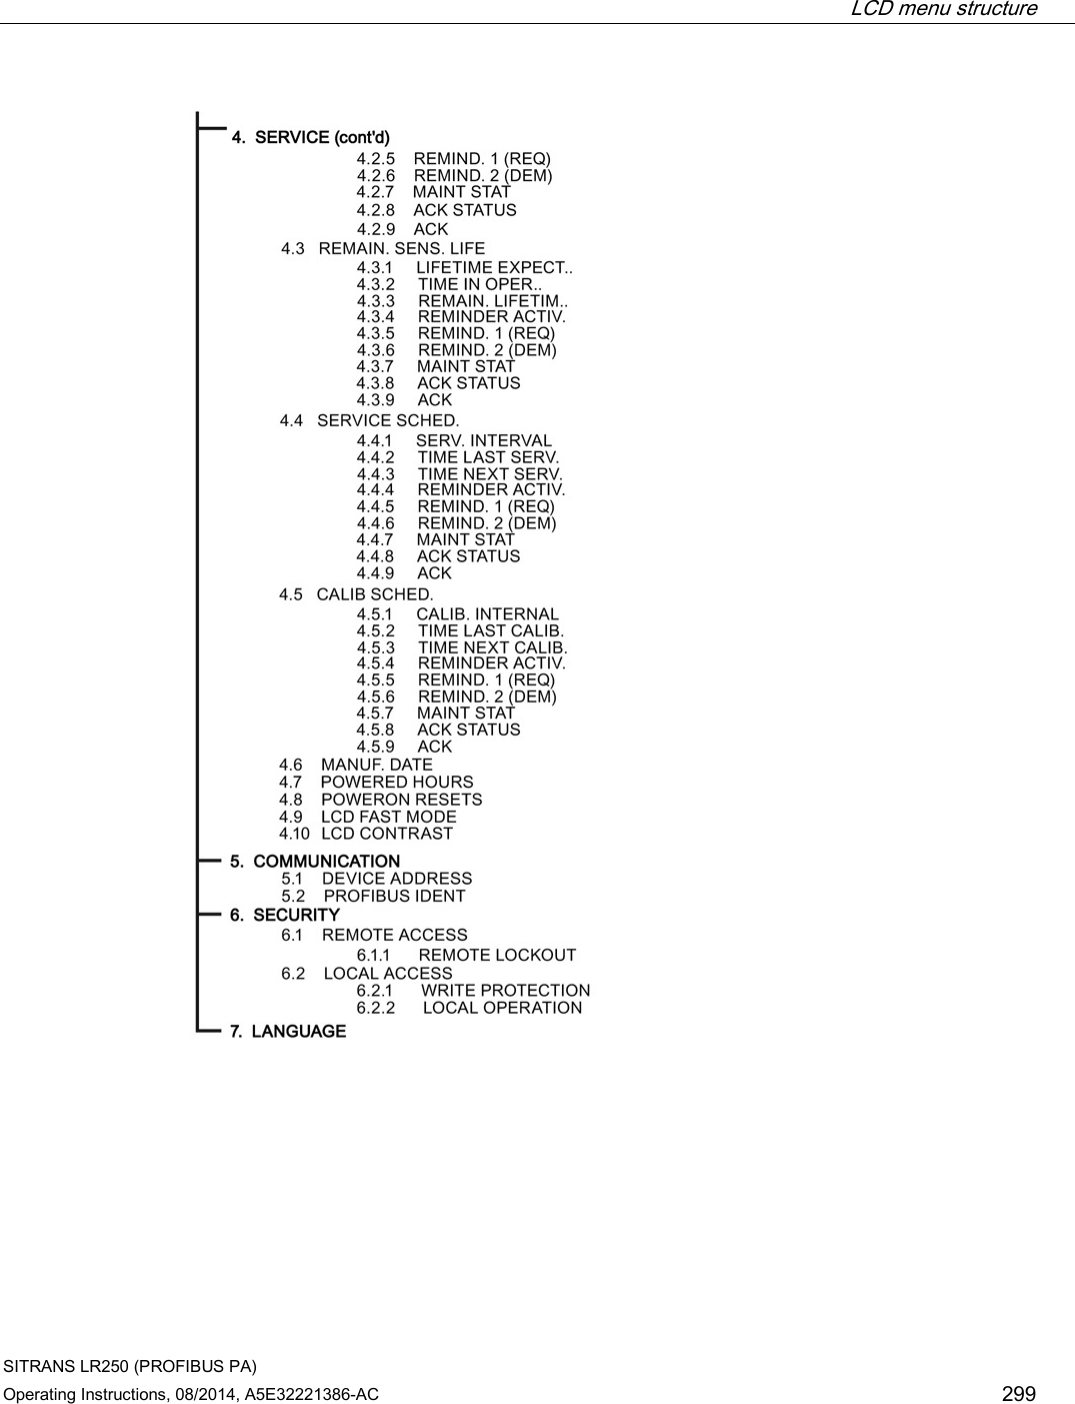  LCD menu structure   SITRANS LR250 (PROFIBUS PA) Operating Instructions, 08/2014, A5E32221386-AC 299  